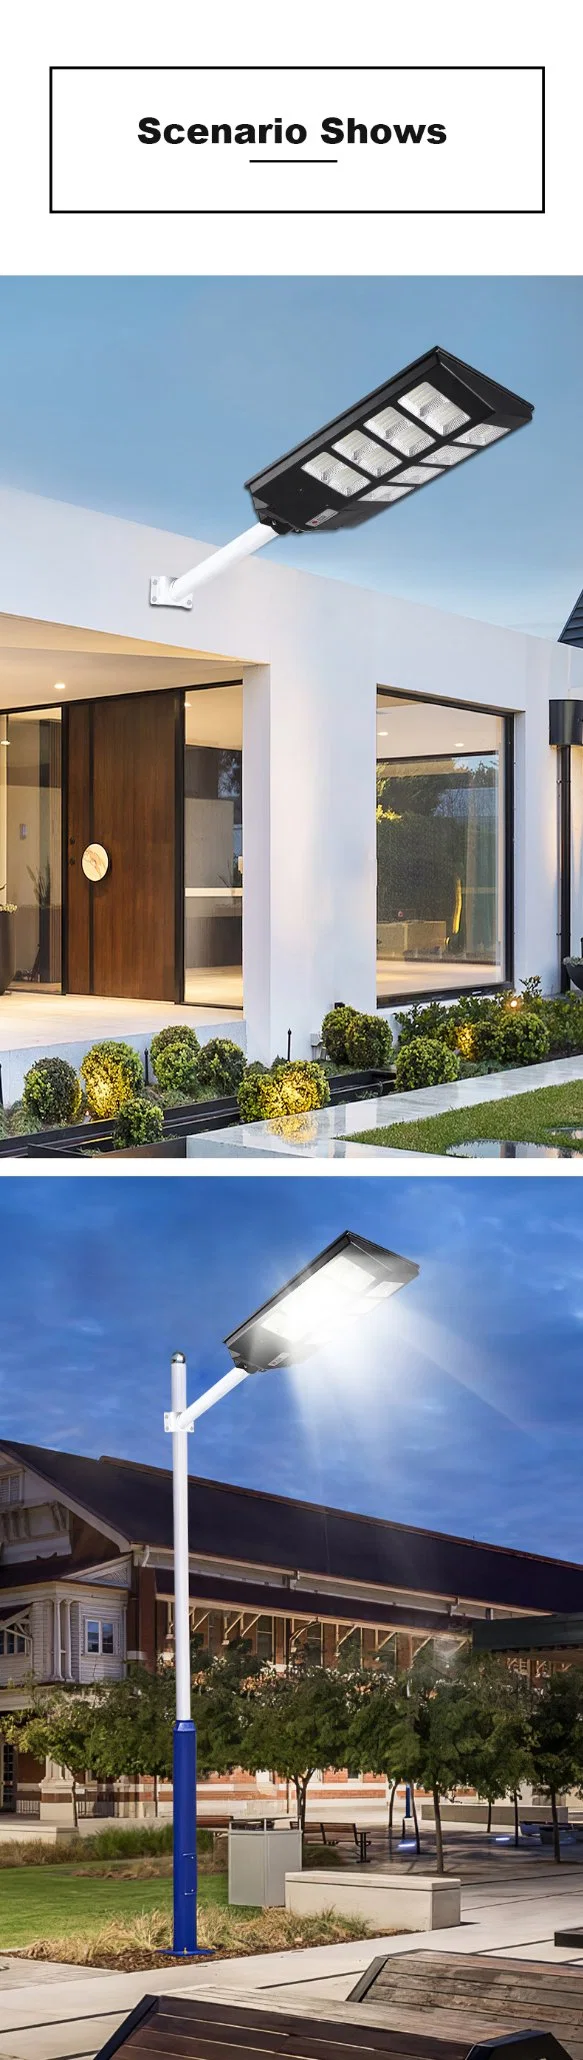 Garden Solar Lamp Flame Outdoor Decorative Light Ceiling Camping Solar